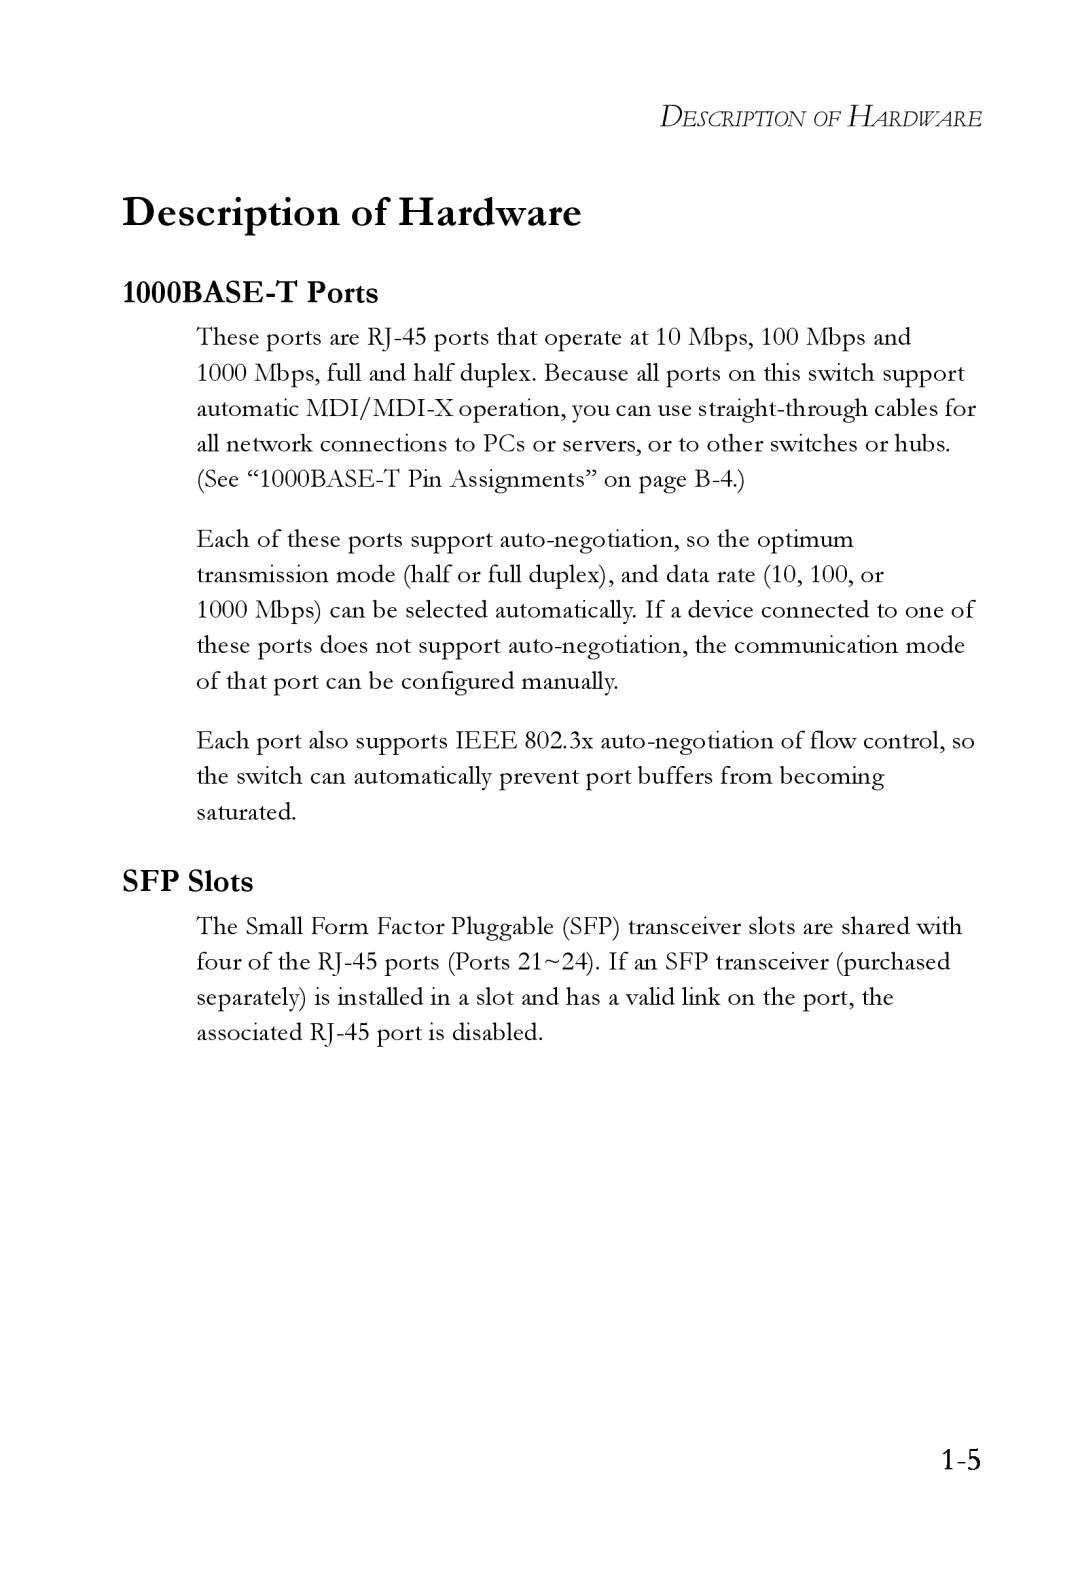 SMC Networks SMC8624T manual Description of Hardware, 1000BASE-T Ports, SFP Slots 